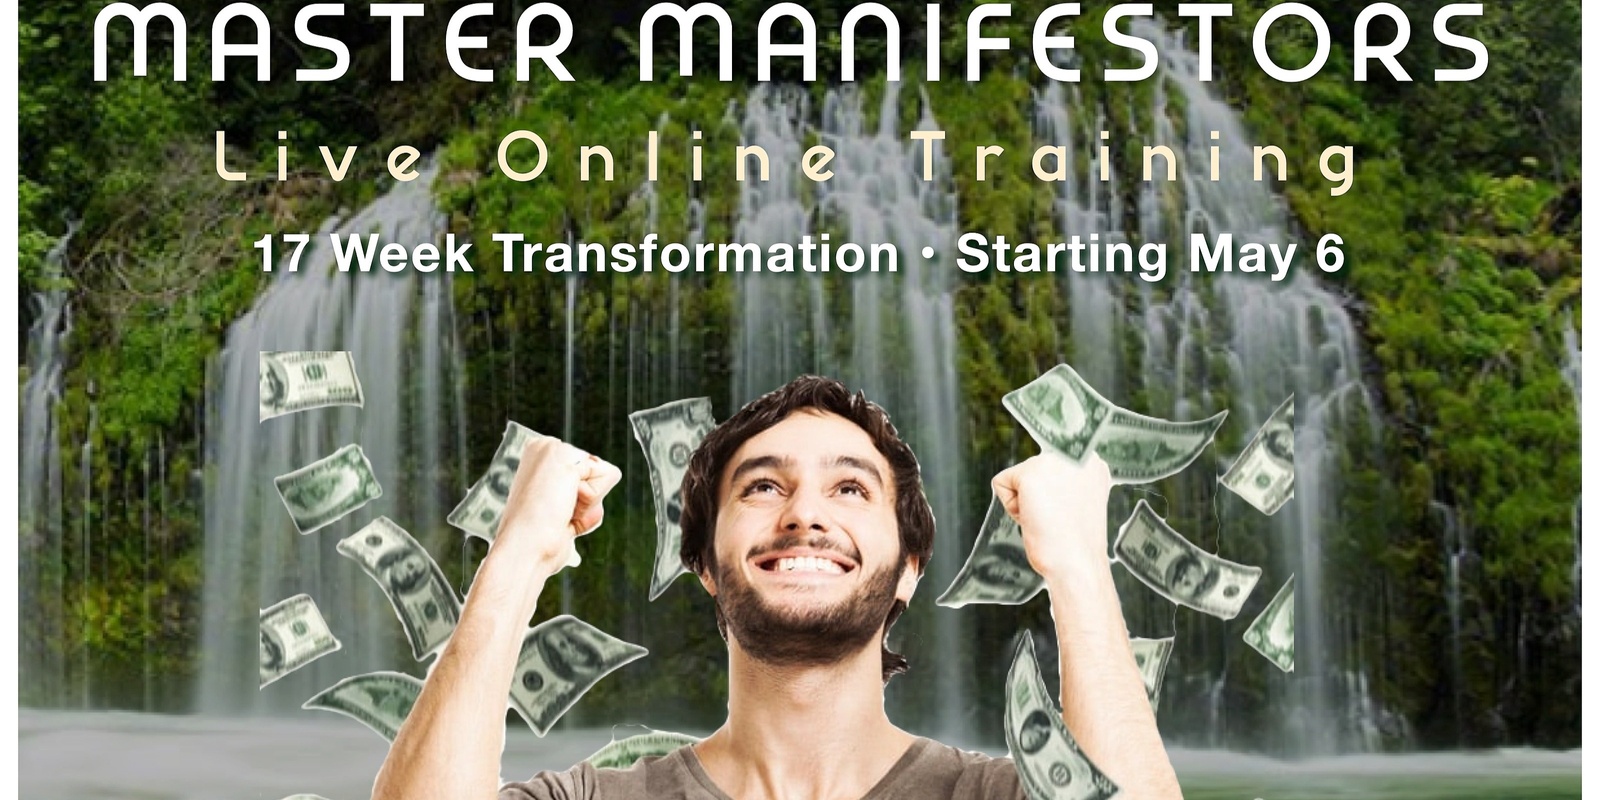 Banner image for Master Manifestors Training